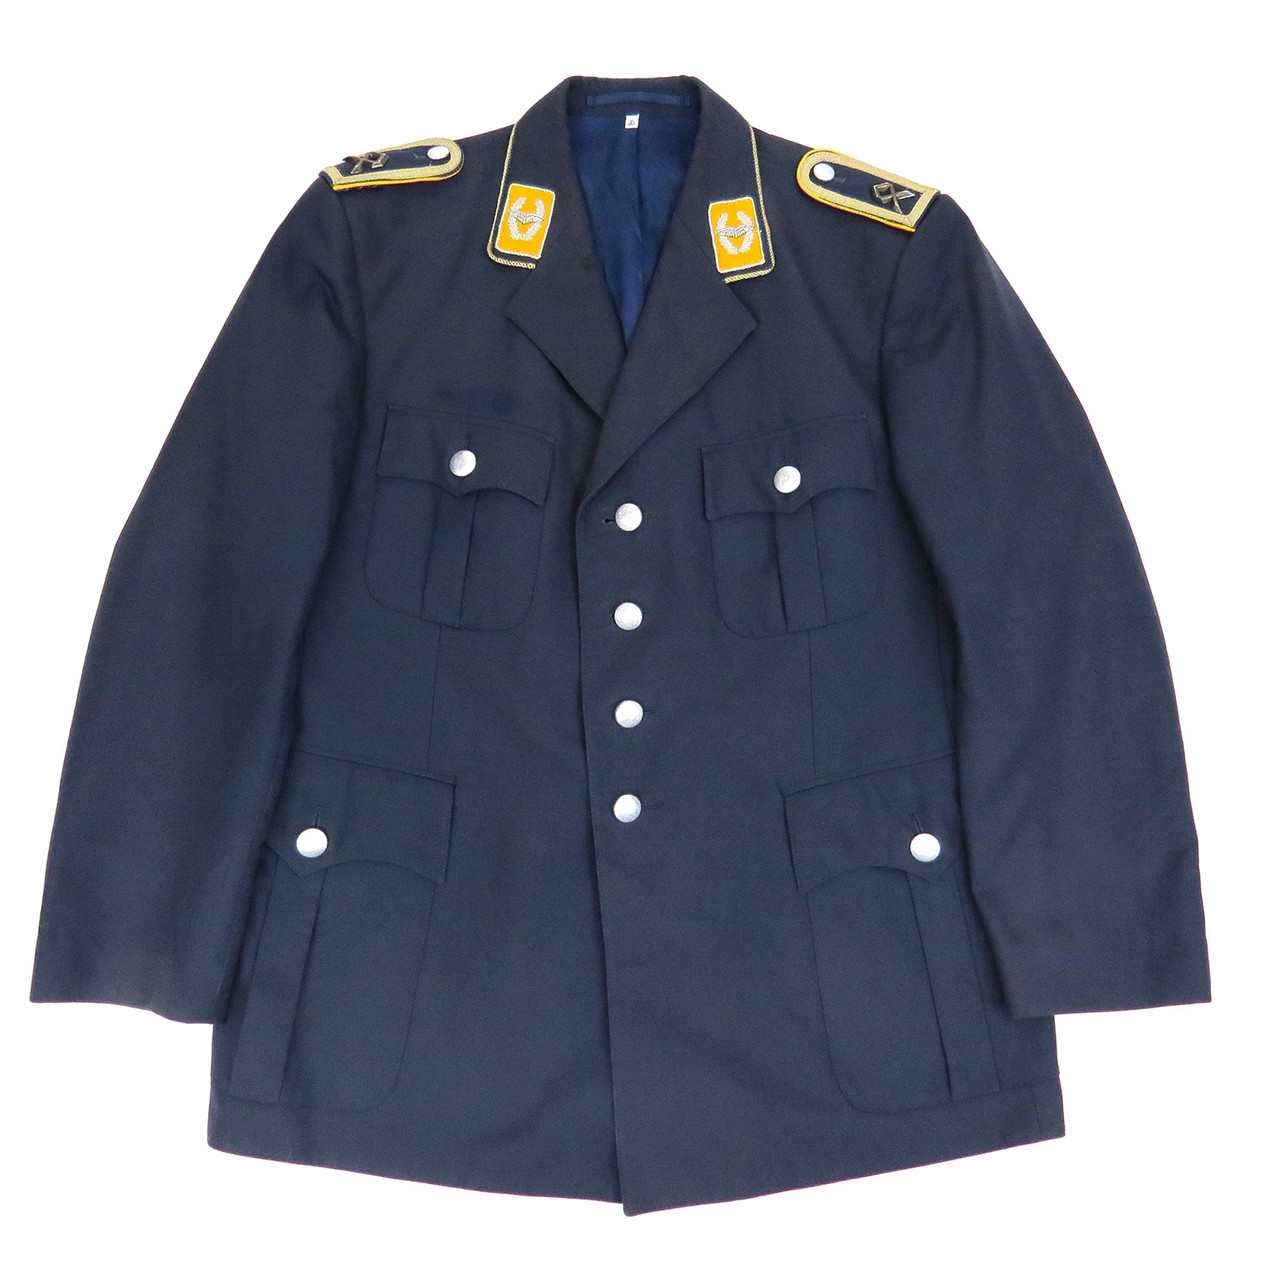 Bw Luftwaffe NCO Blue Uniform Jacket - L Reg